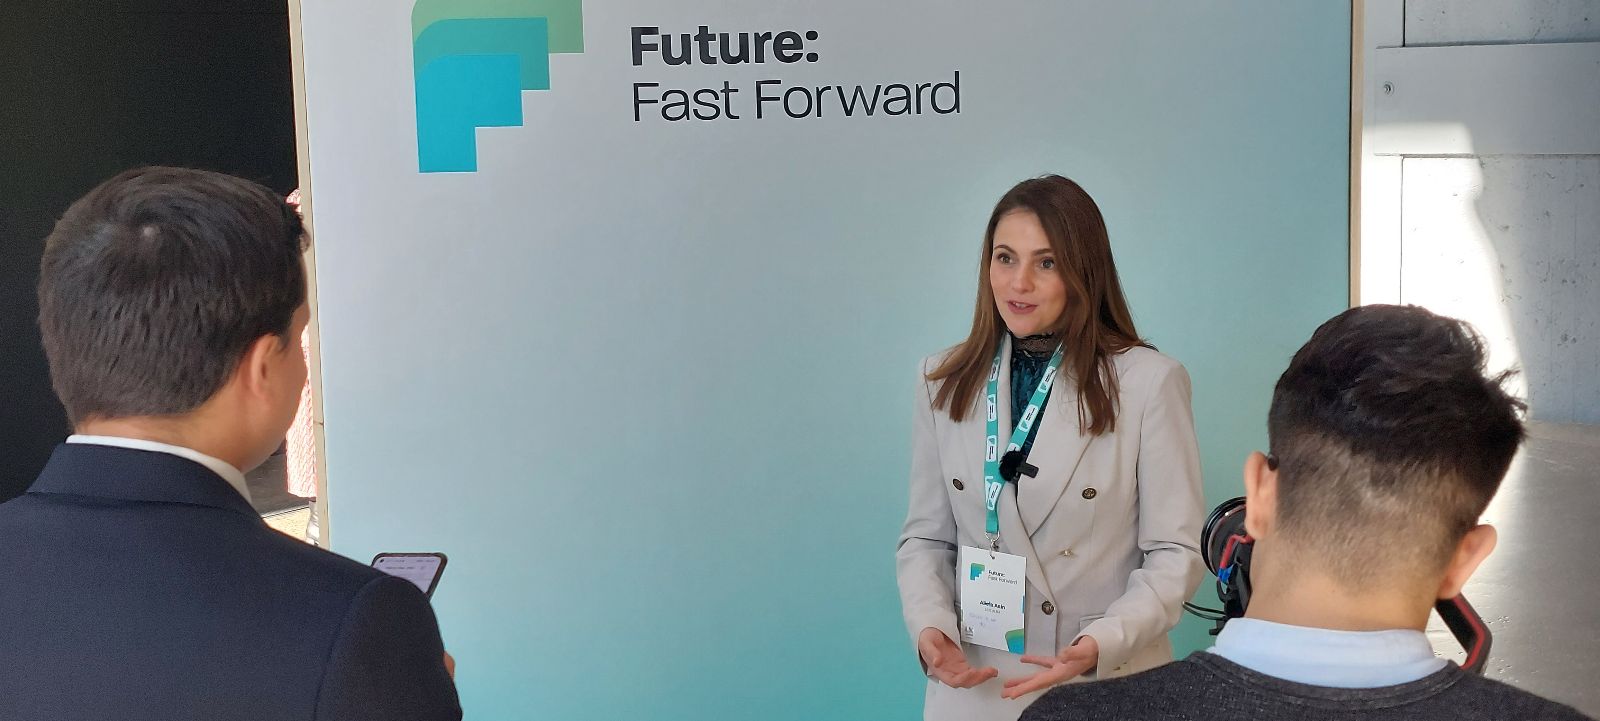 Alicia Asín at Future: Fast Forward